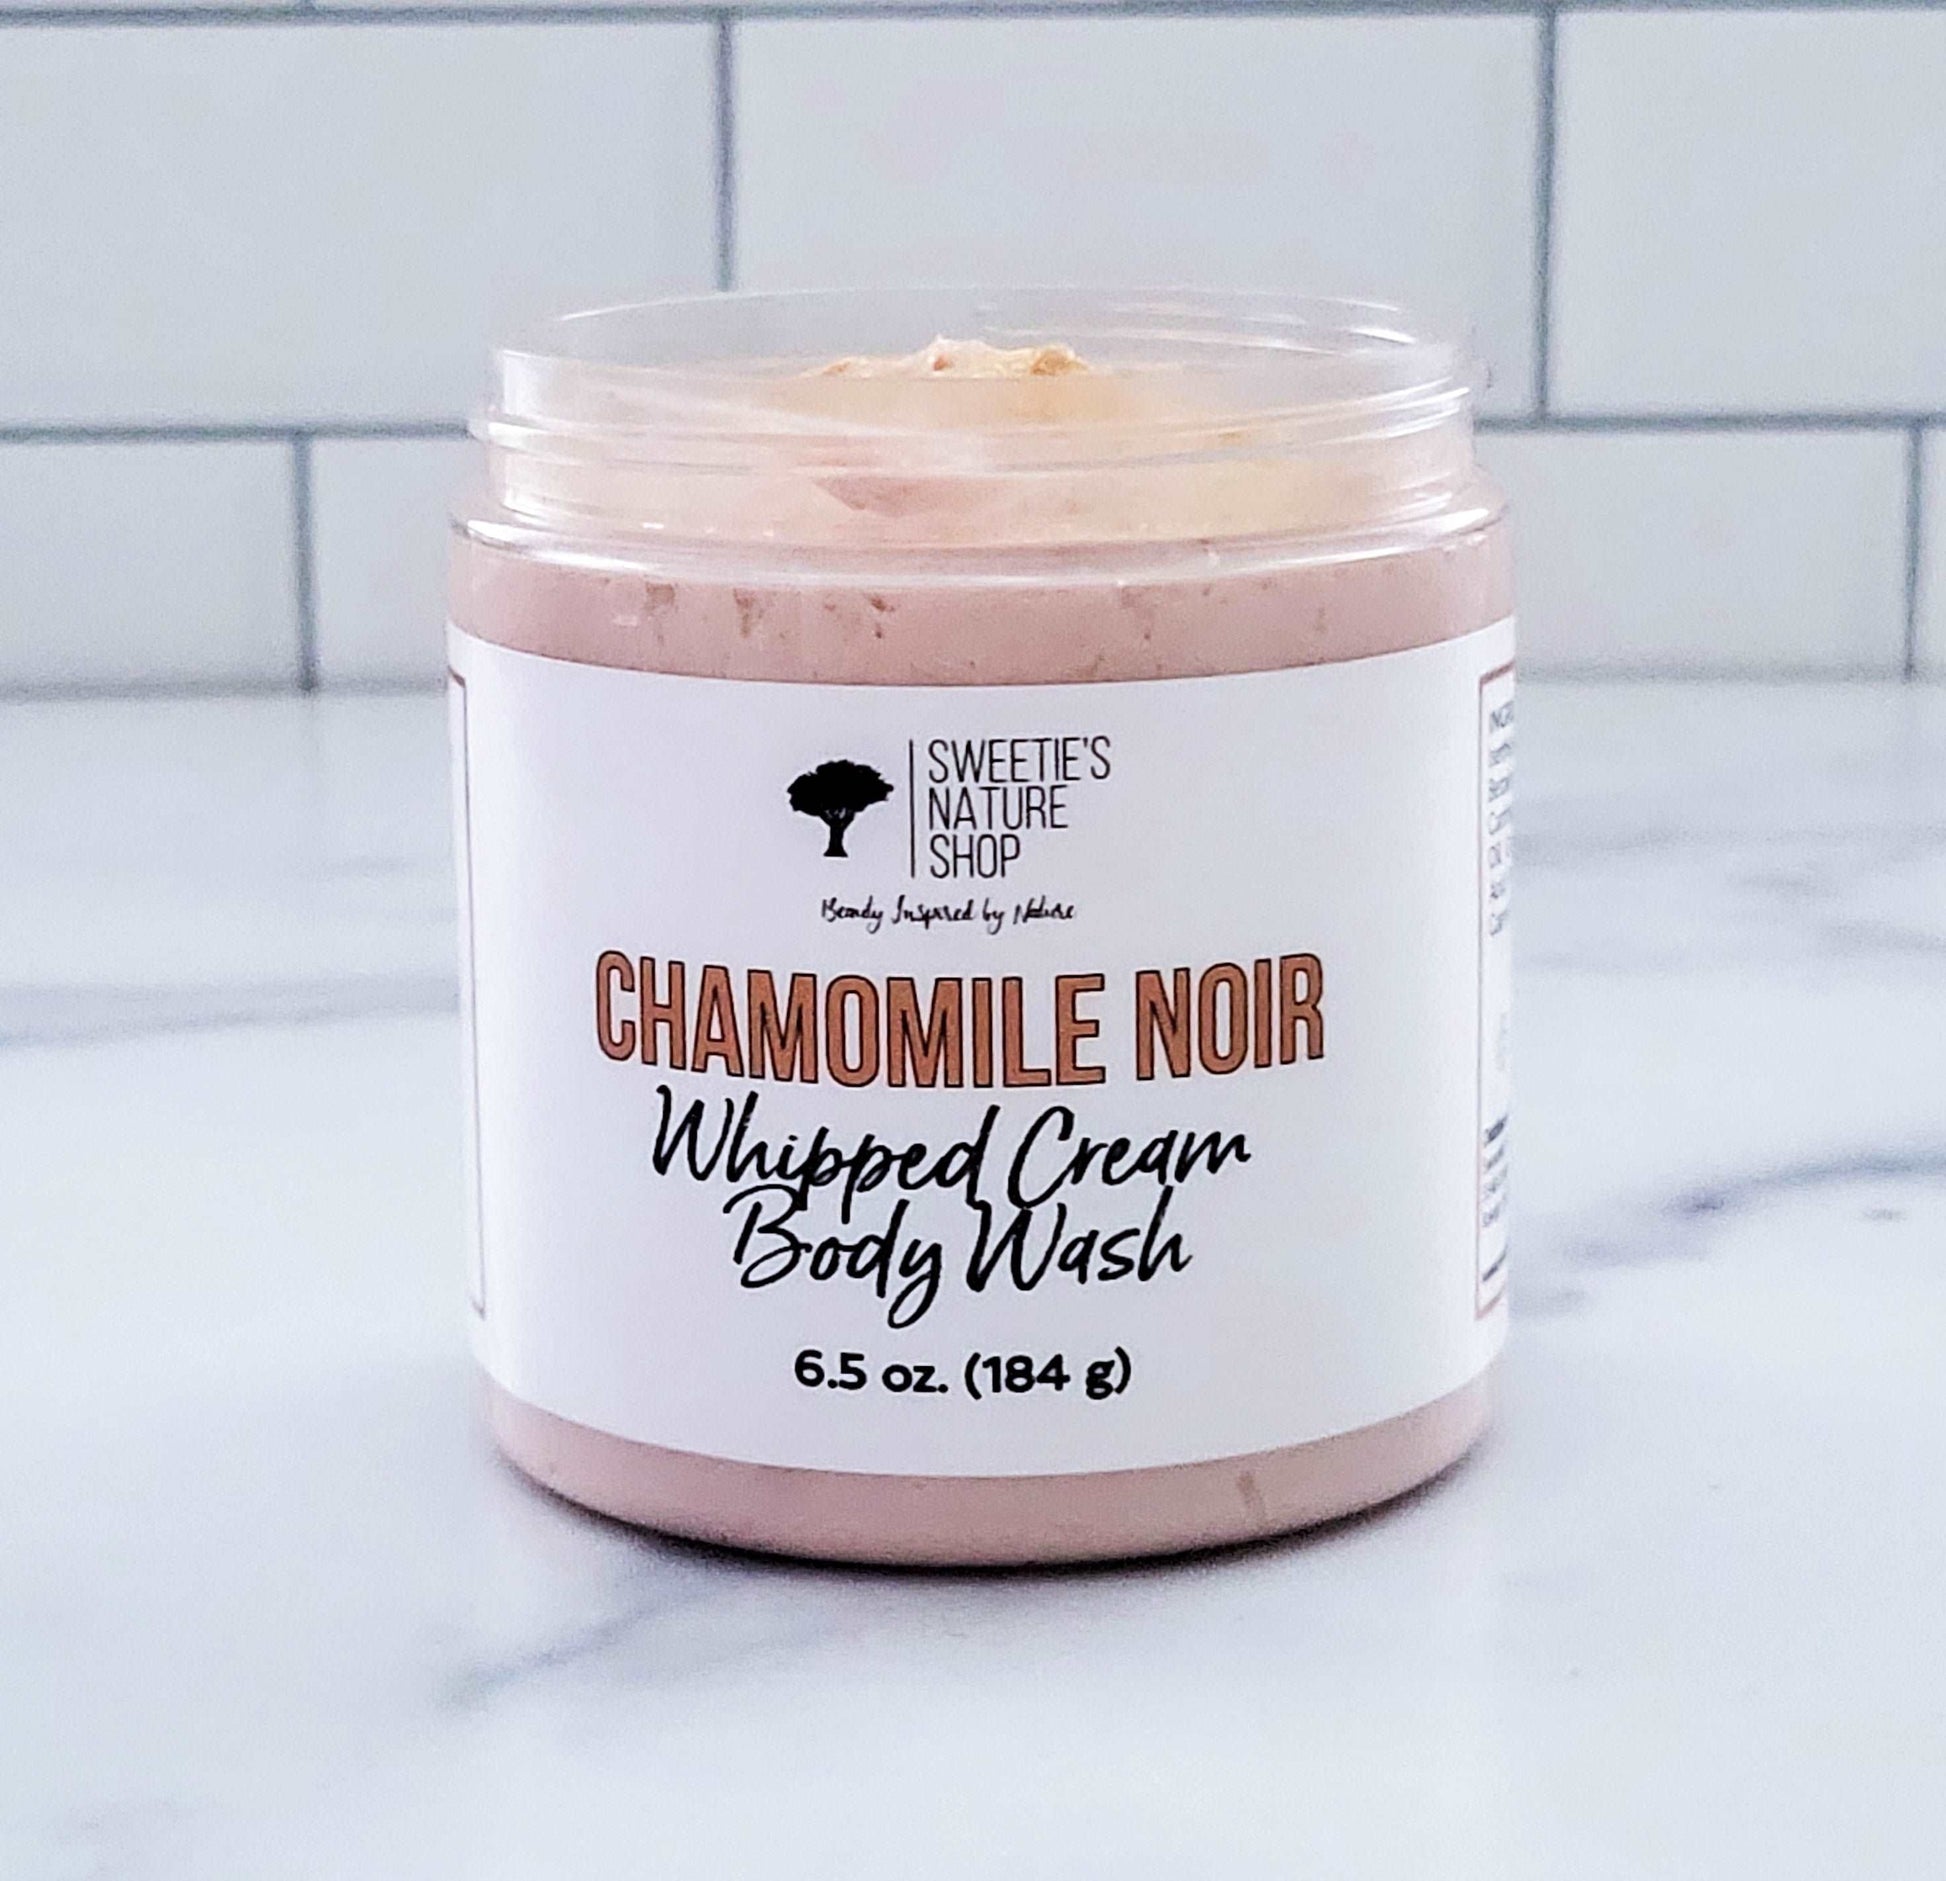 Chamomile Noir Whipped Cream Body Wash